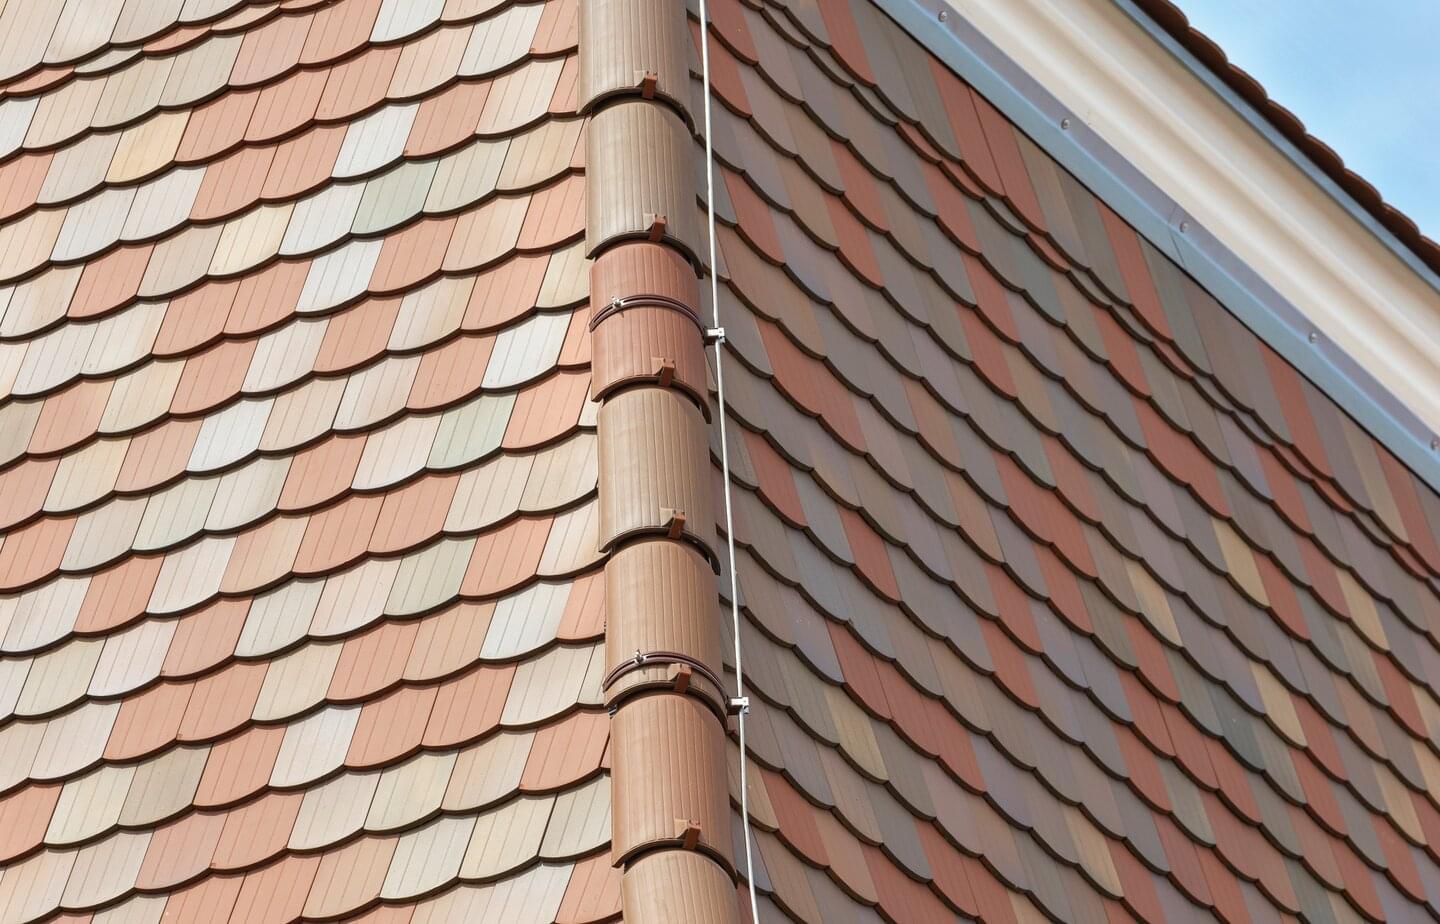 Ergoldsbacher Plain tile "Special design" - Siena | © ERLUS 2021